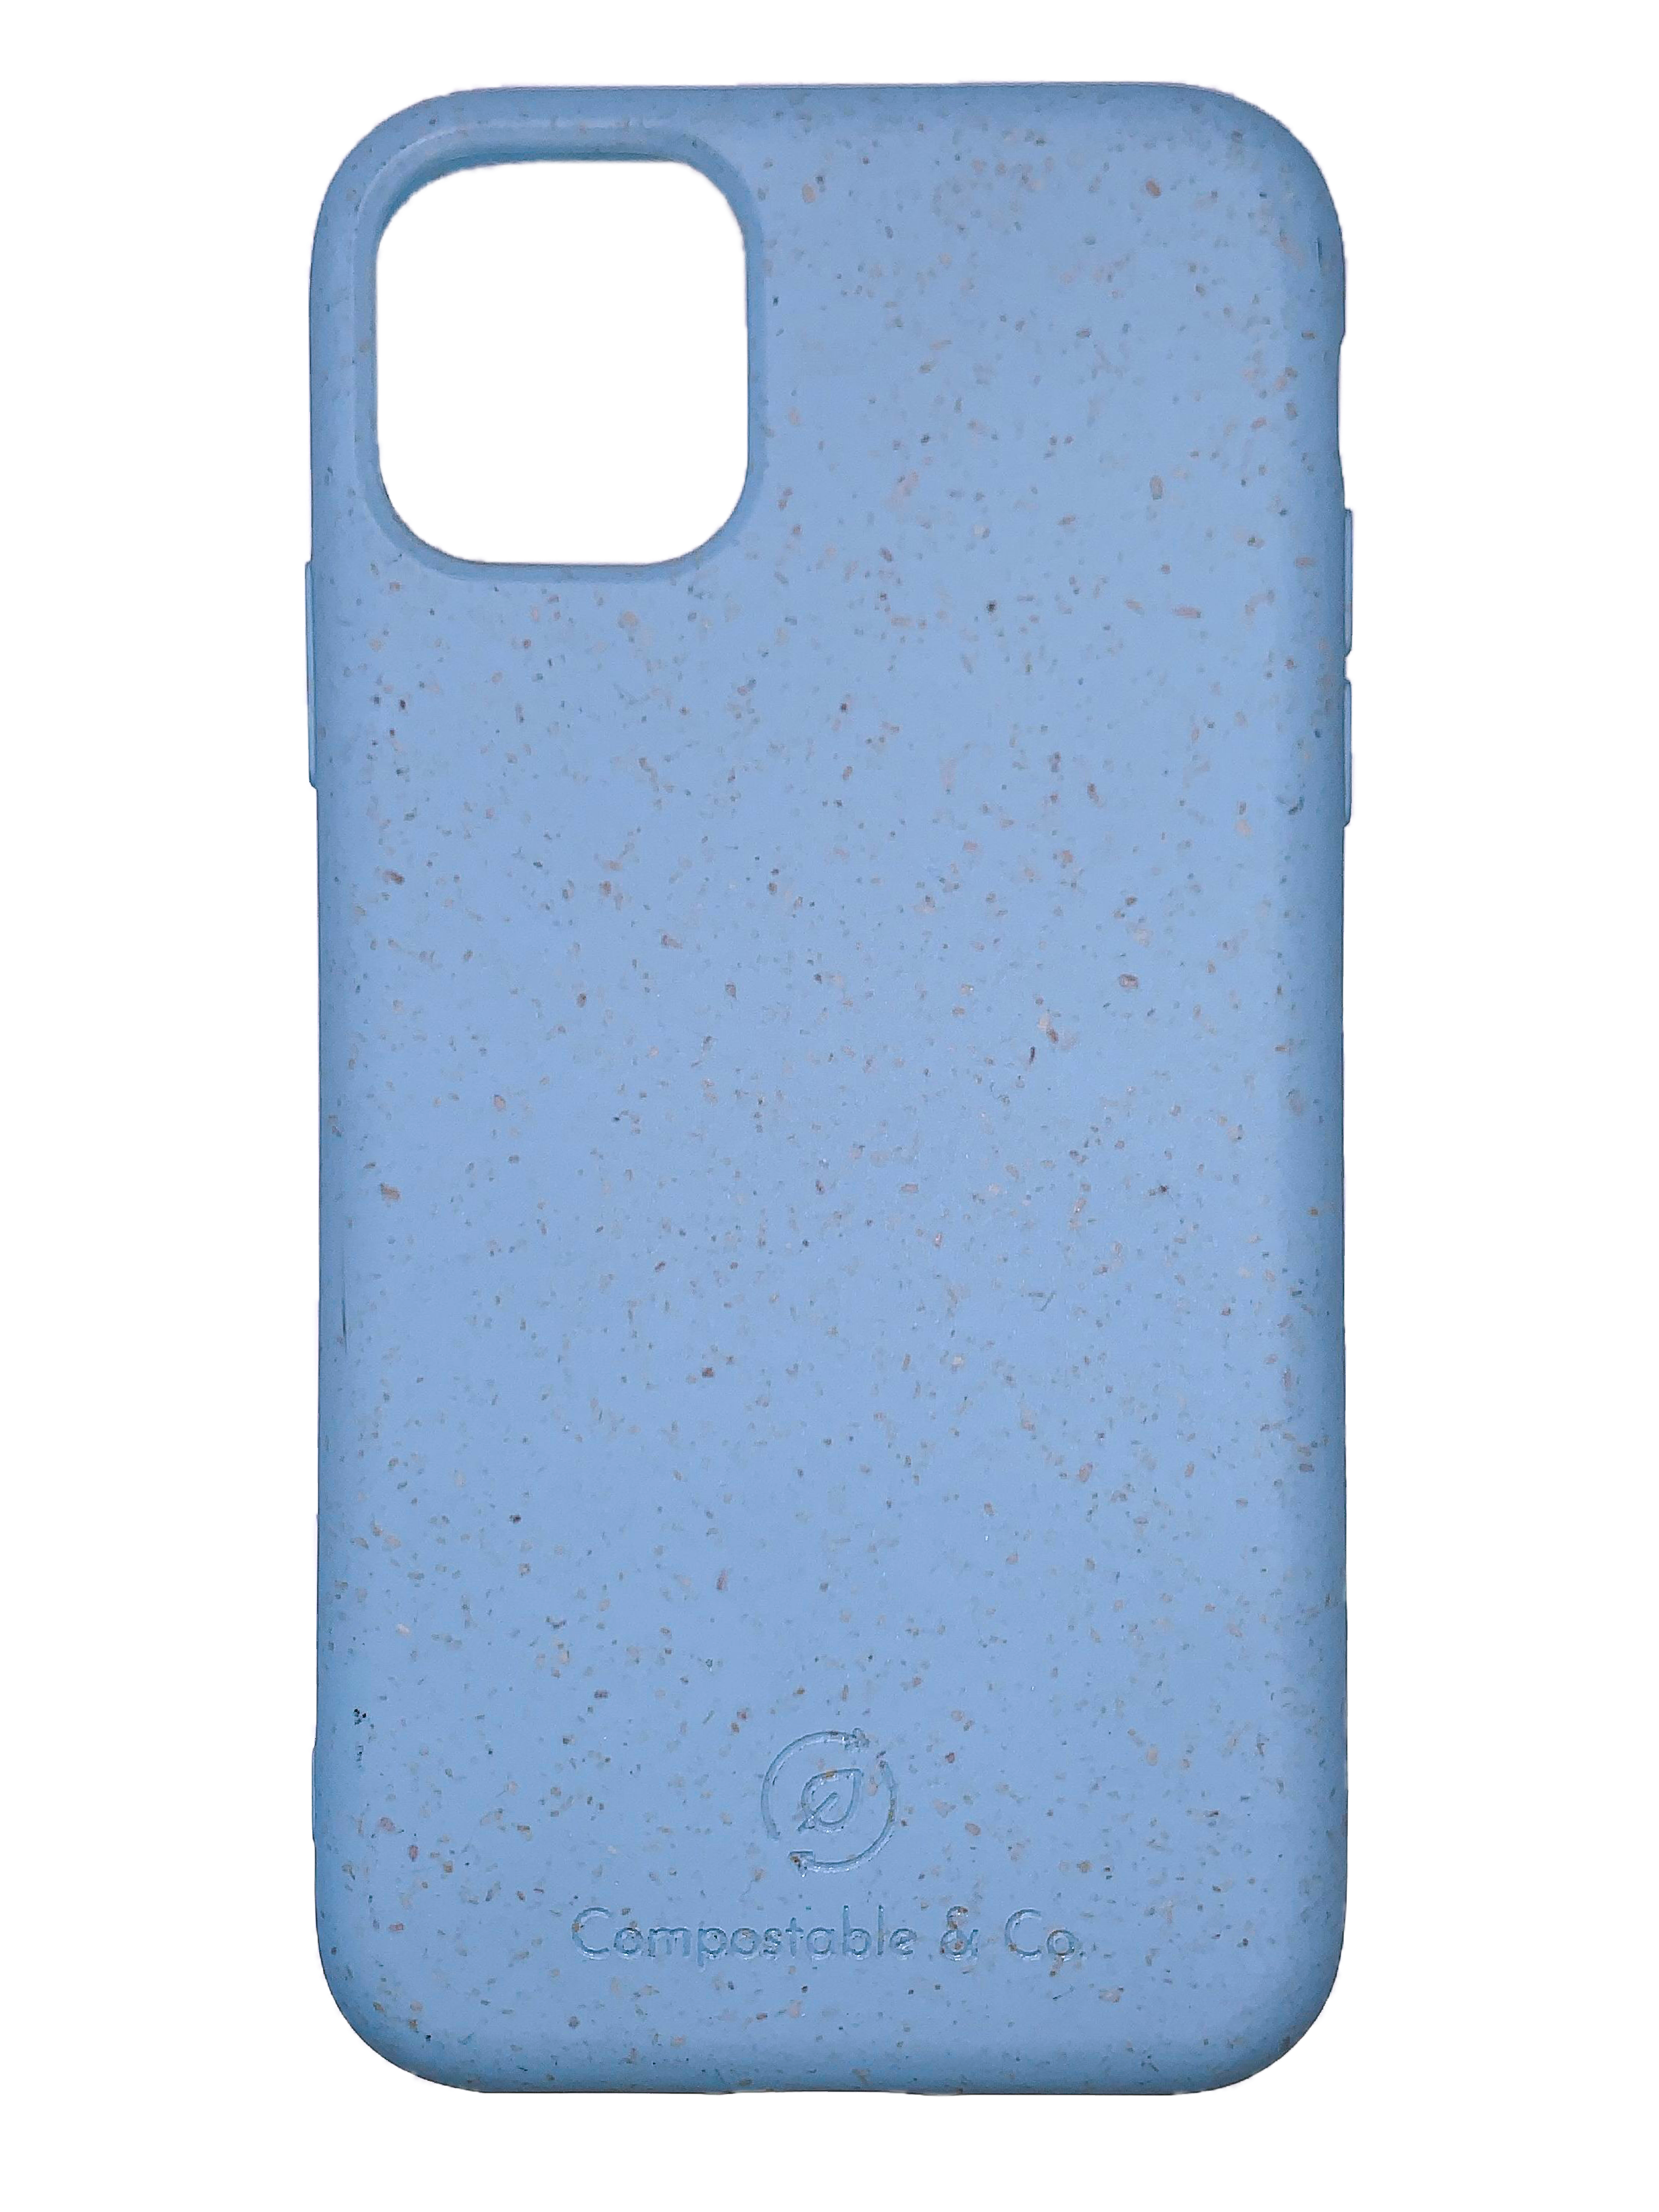 Compostable & Co. iPhone 12 mini blue biodegradable phone case